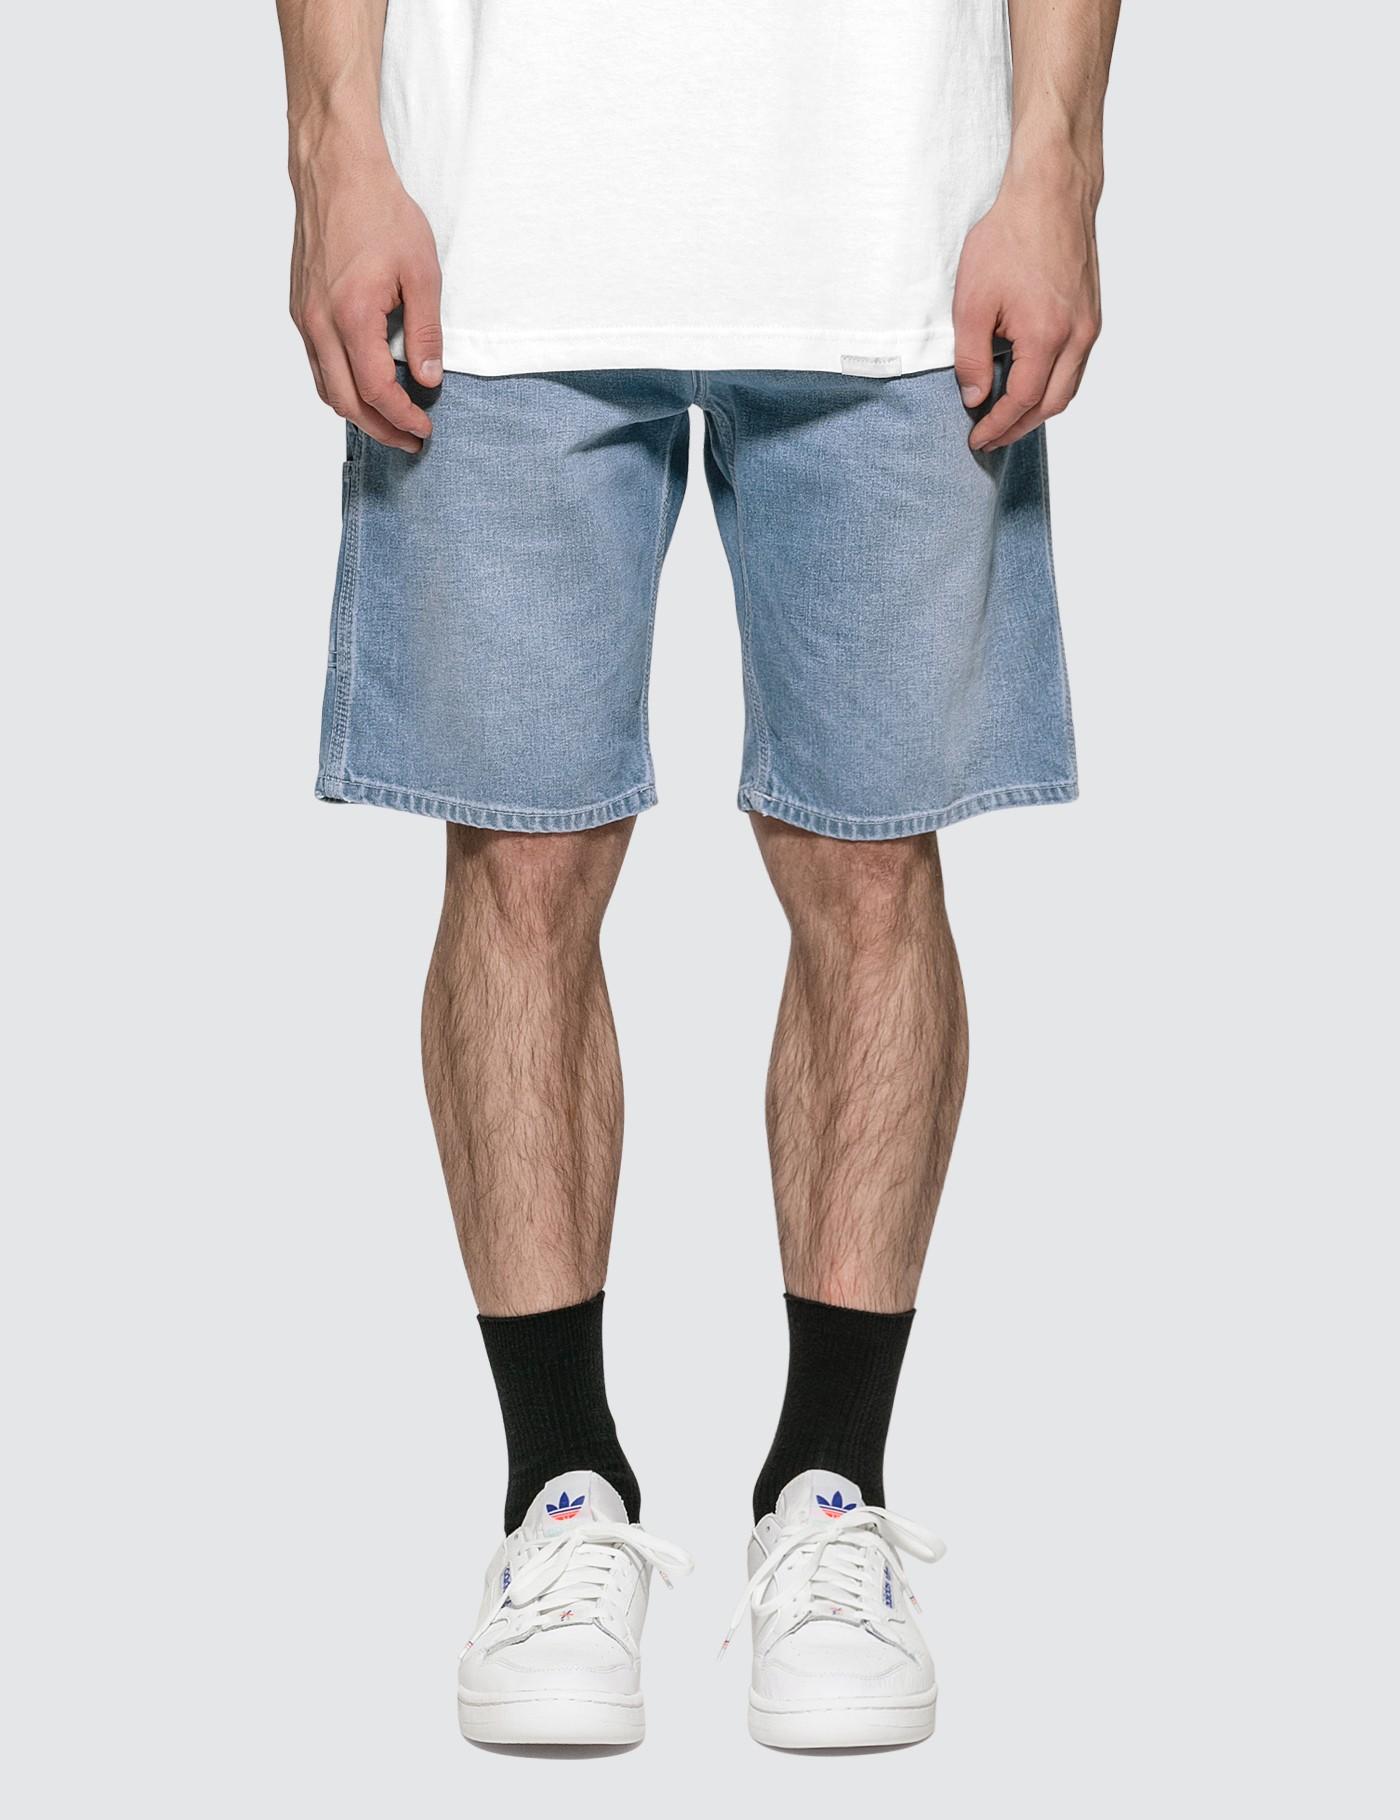 Carhartt WIP Ruck Single Knee Denim Shorts in Blue for Men - Lyst